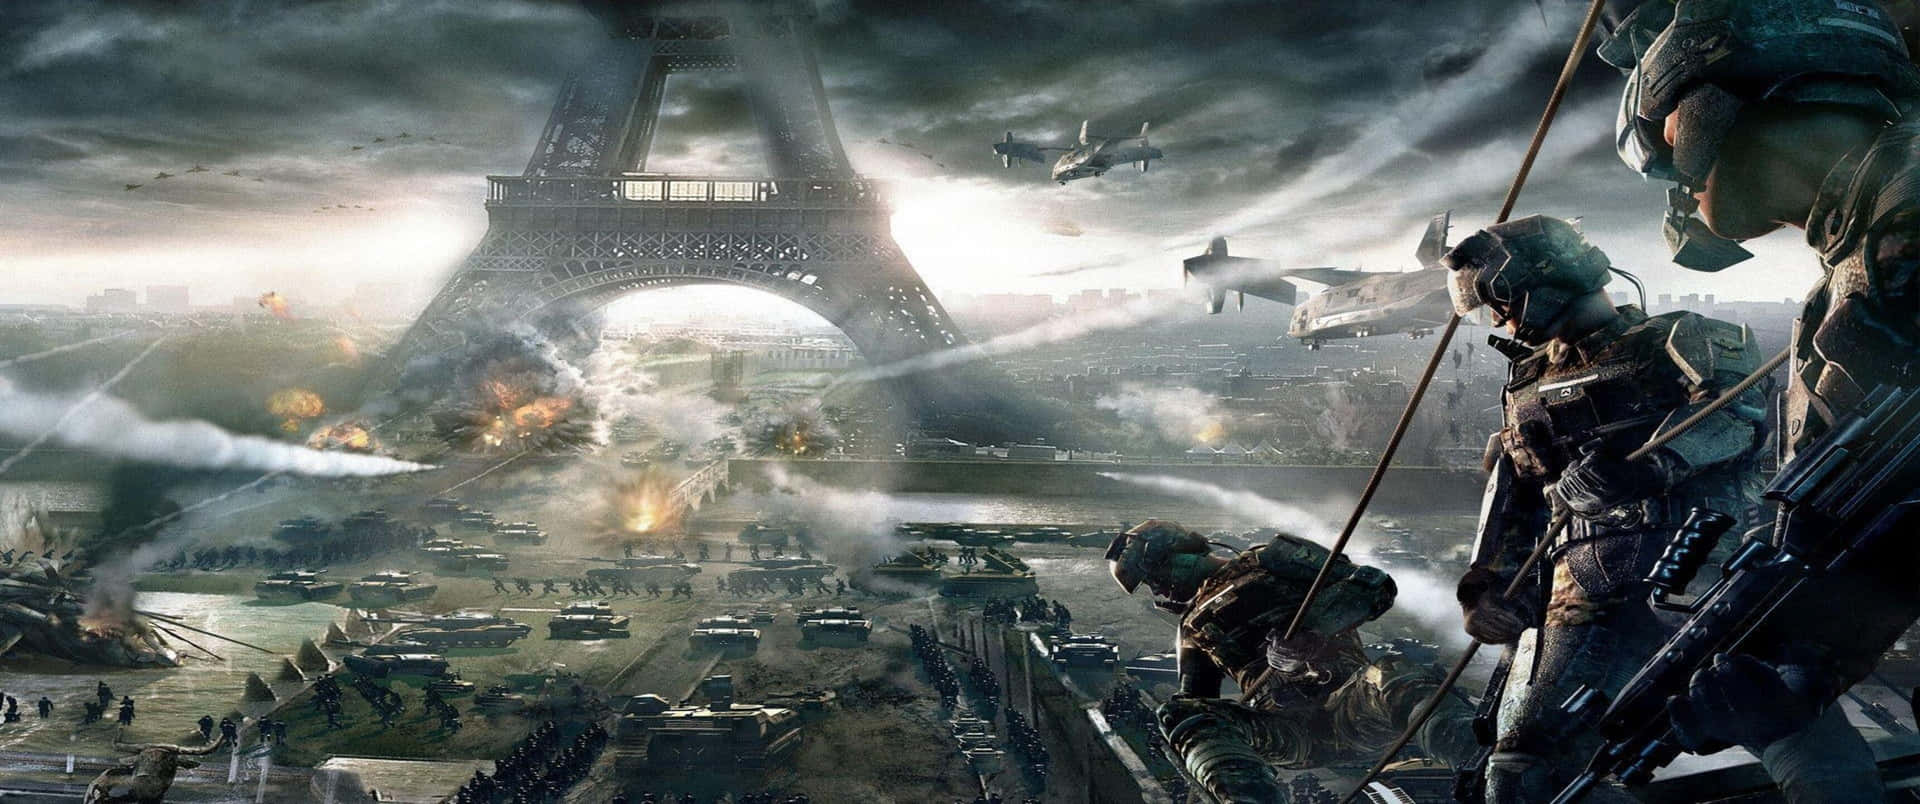 Escenade La Torre Eiffel 3440x1440p Fondo De Pantalla De Call Of Duty Modern Warfare